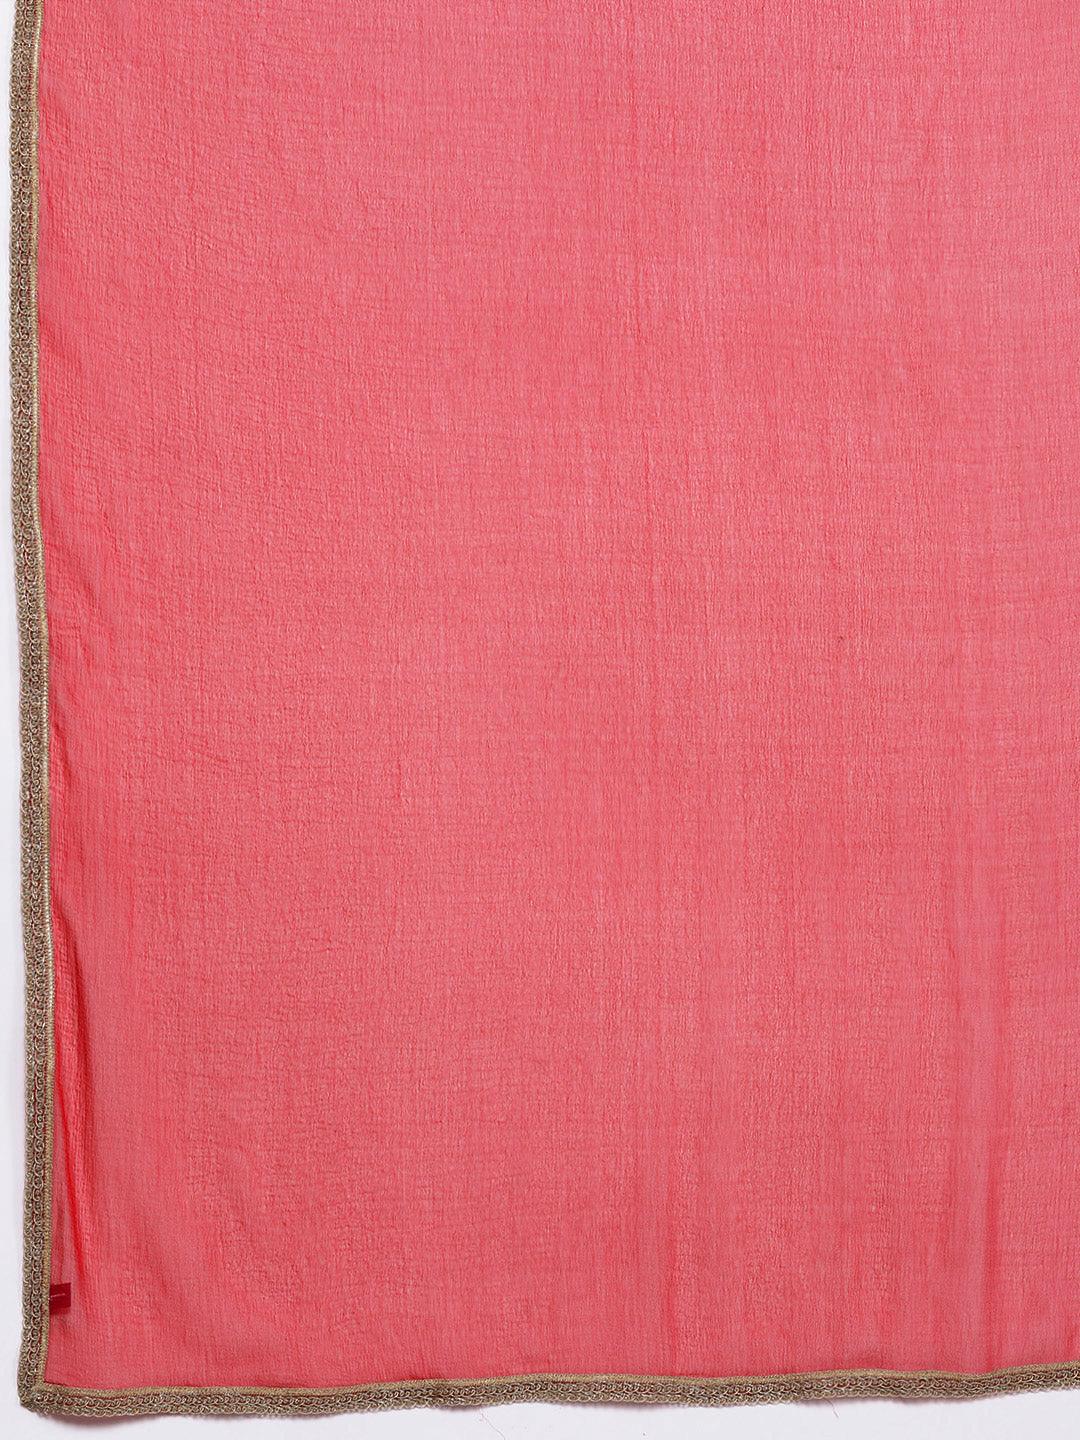 Plus Size Pink Printed Silk Blend Straight Suit Set - Libas